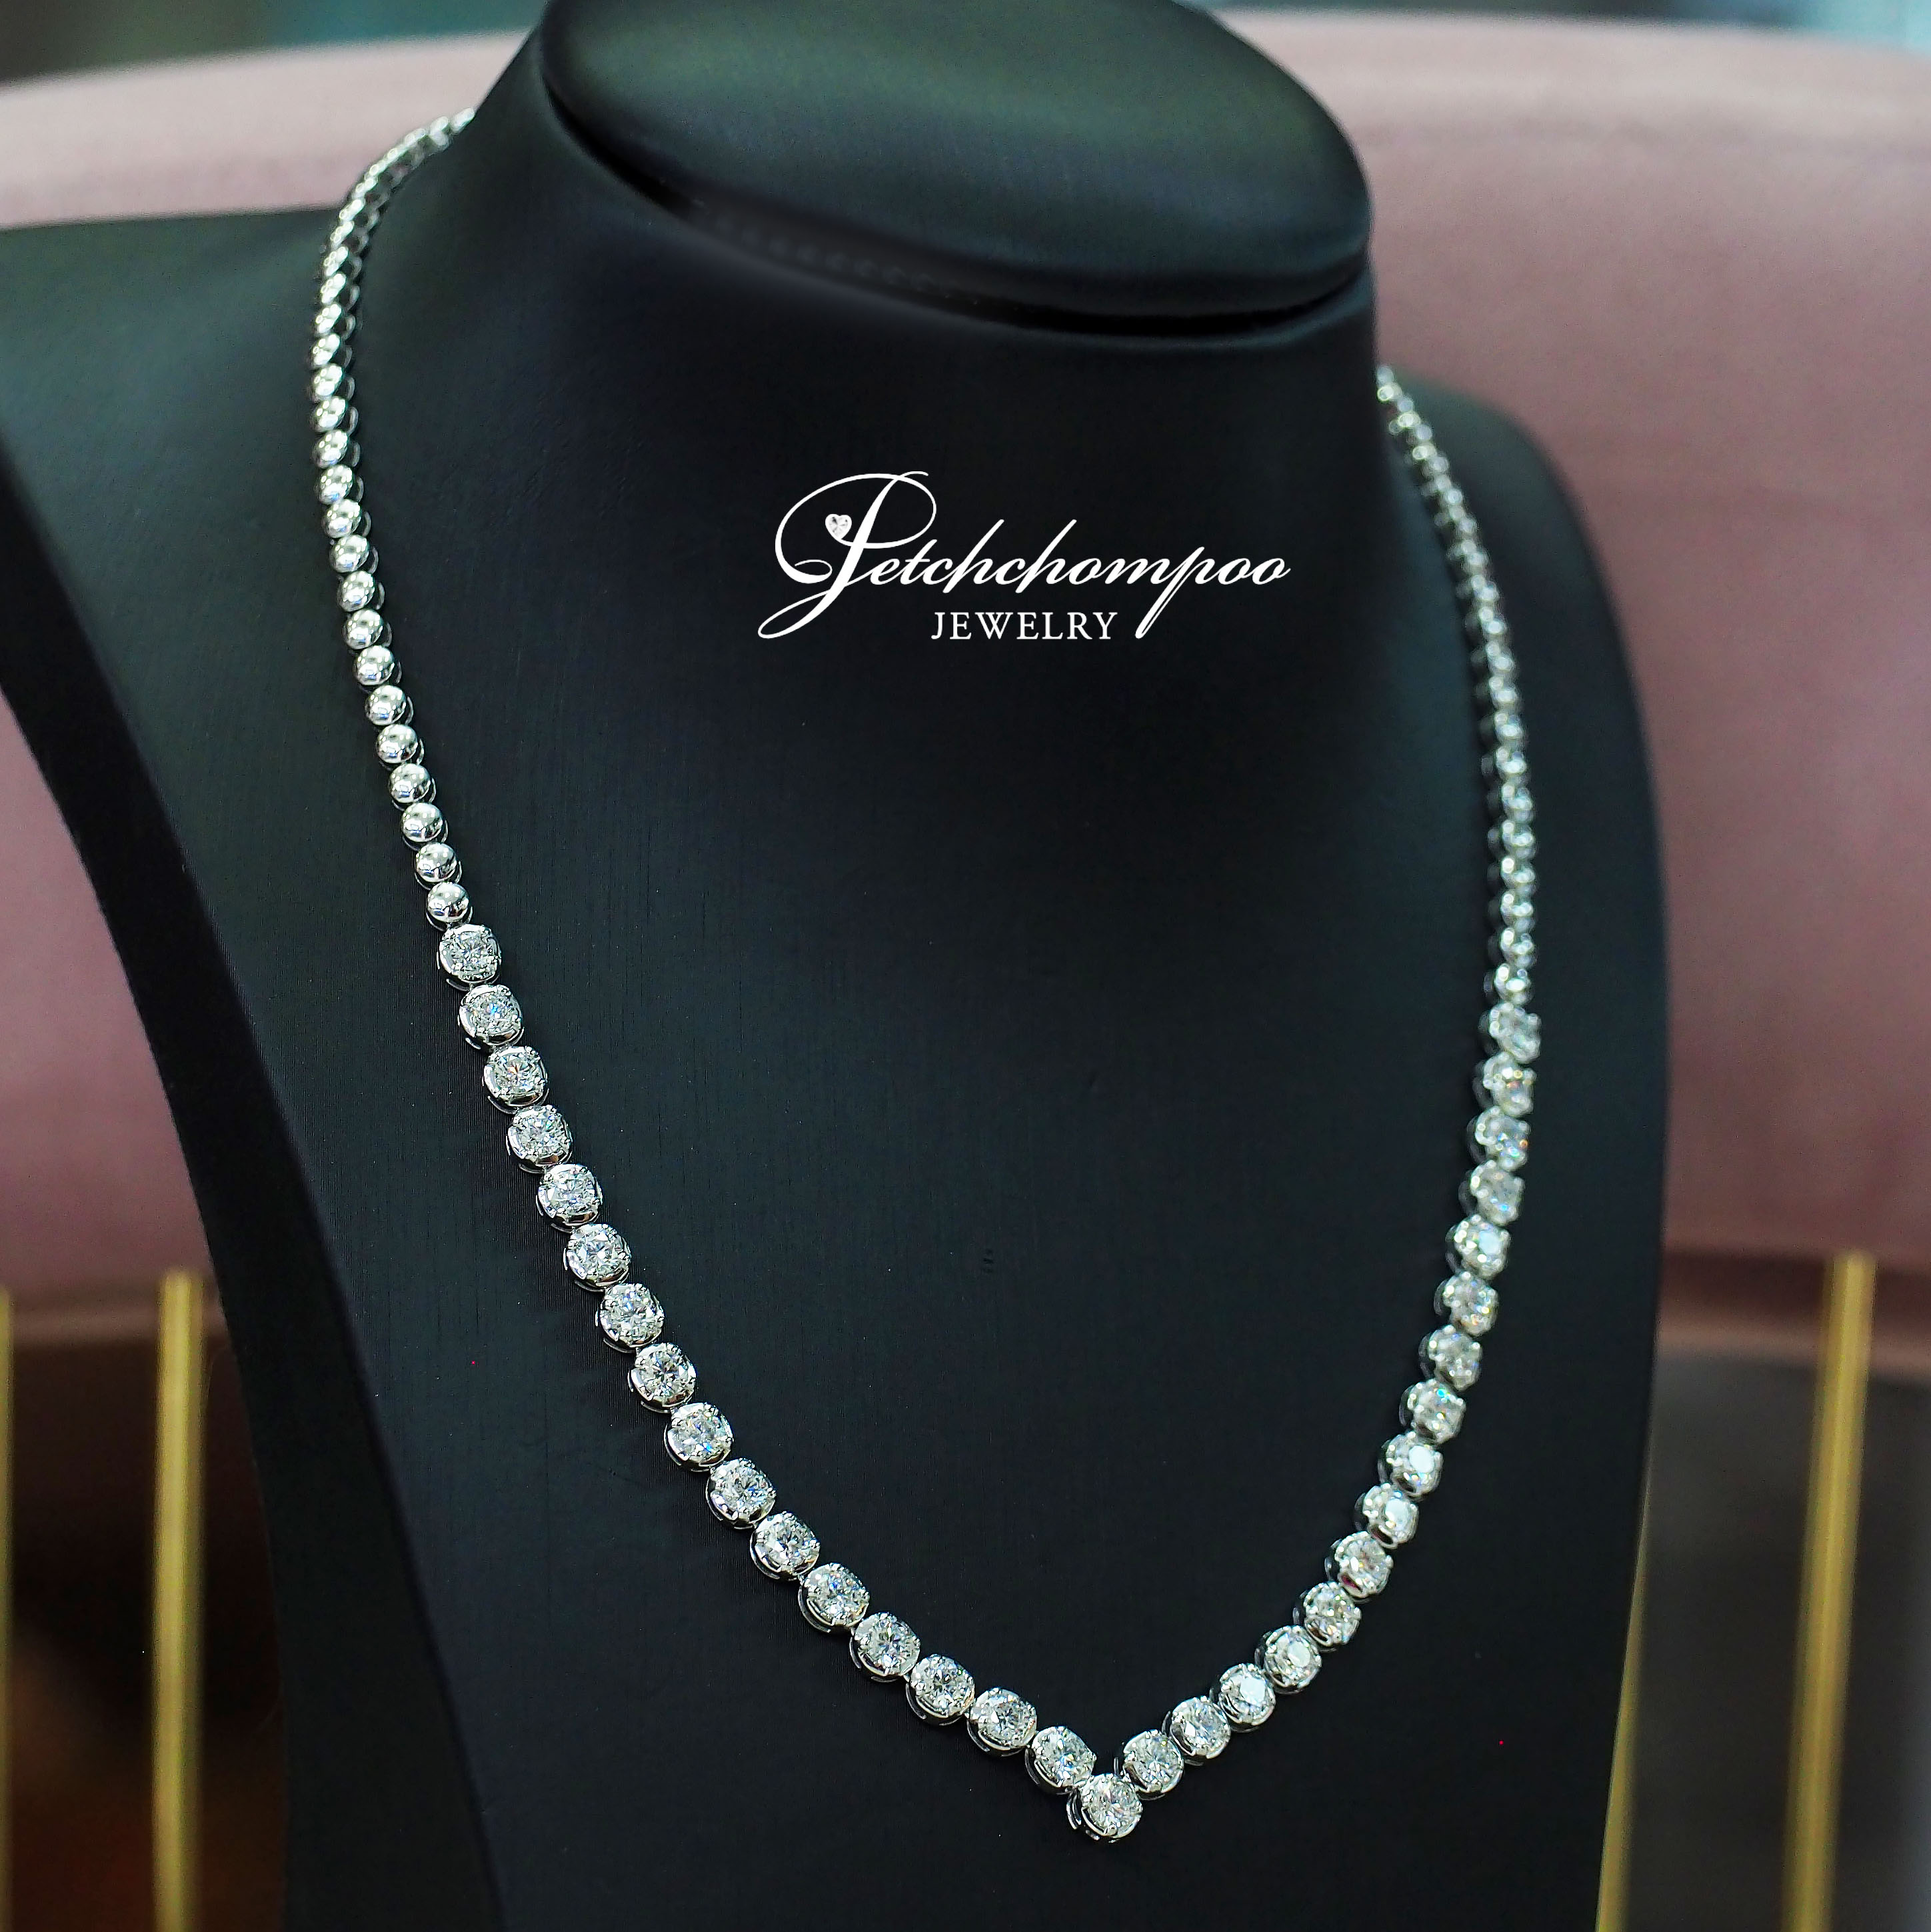 [26999] V shape necklace set with diamonds Discount 299,000